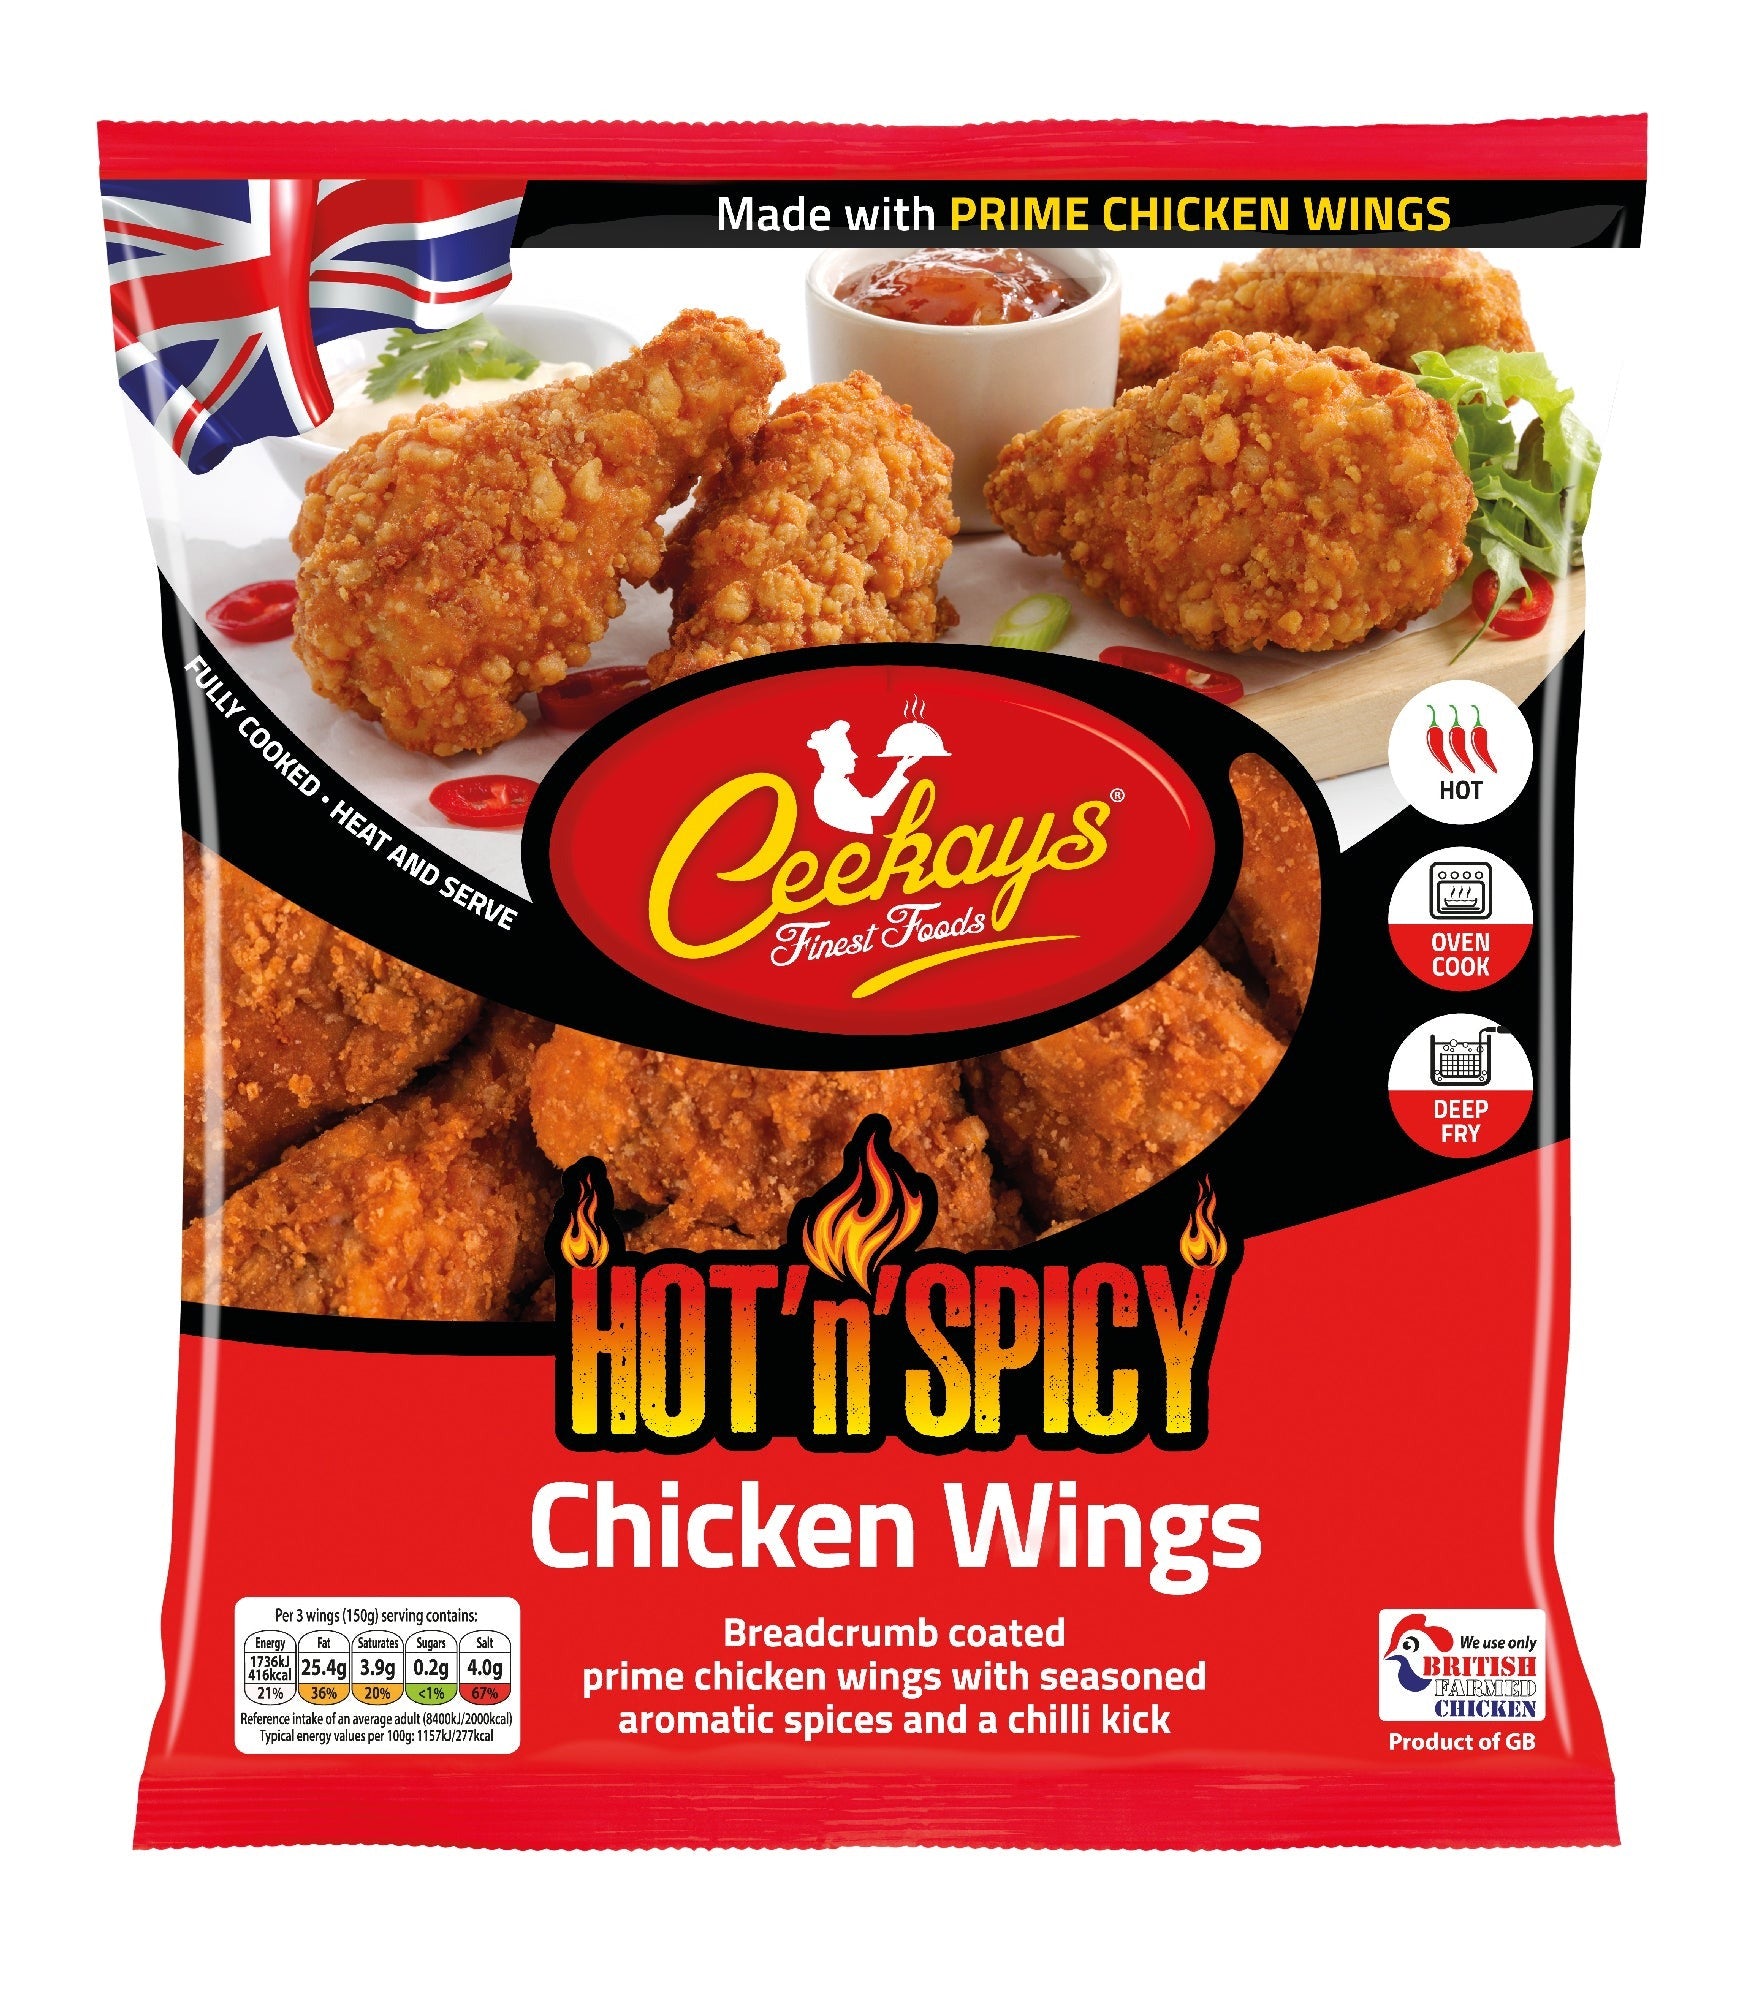 Ceekays Hot ‘n’ Spicy Breaded Chicken Wings (600g) - The Halal Food Shop